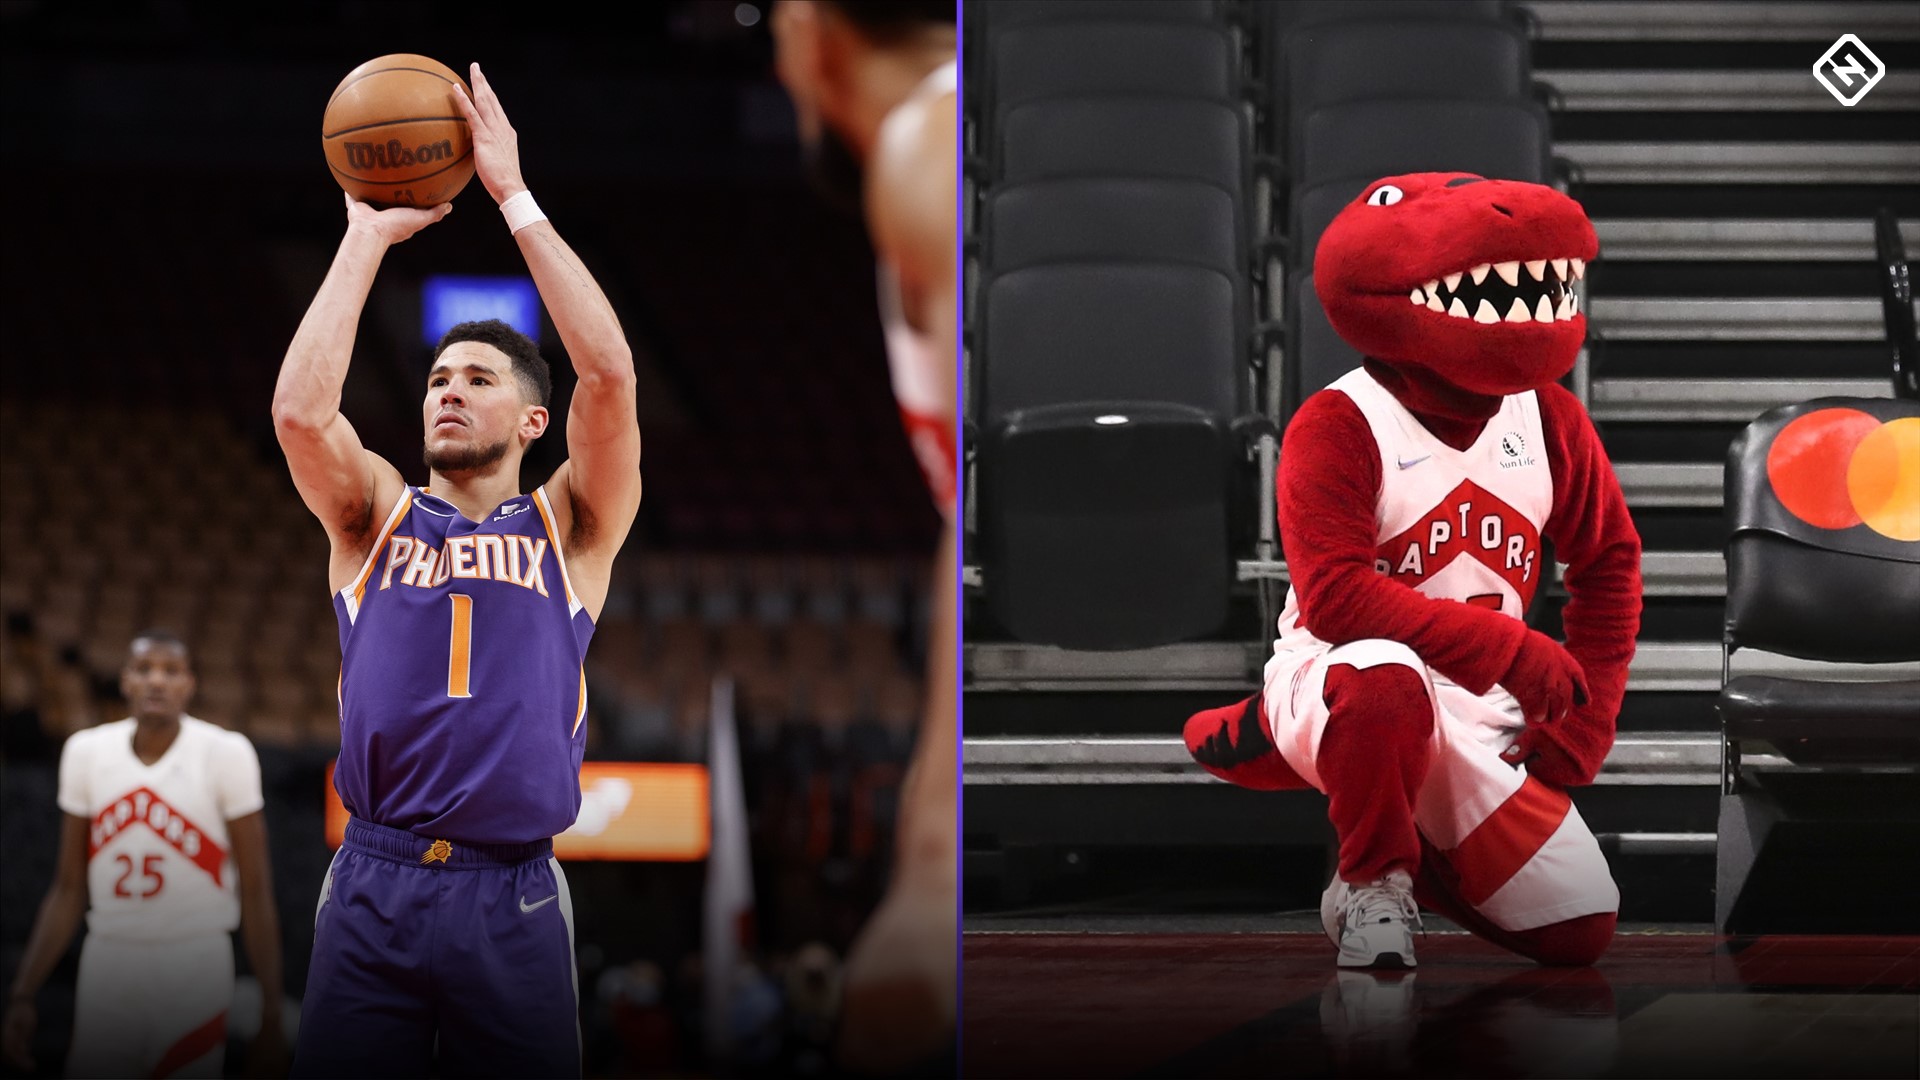 Devin Booker vs. the Raptor? Suns star challenges Raptors mascot antics